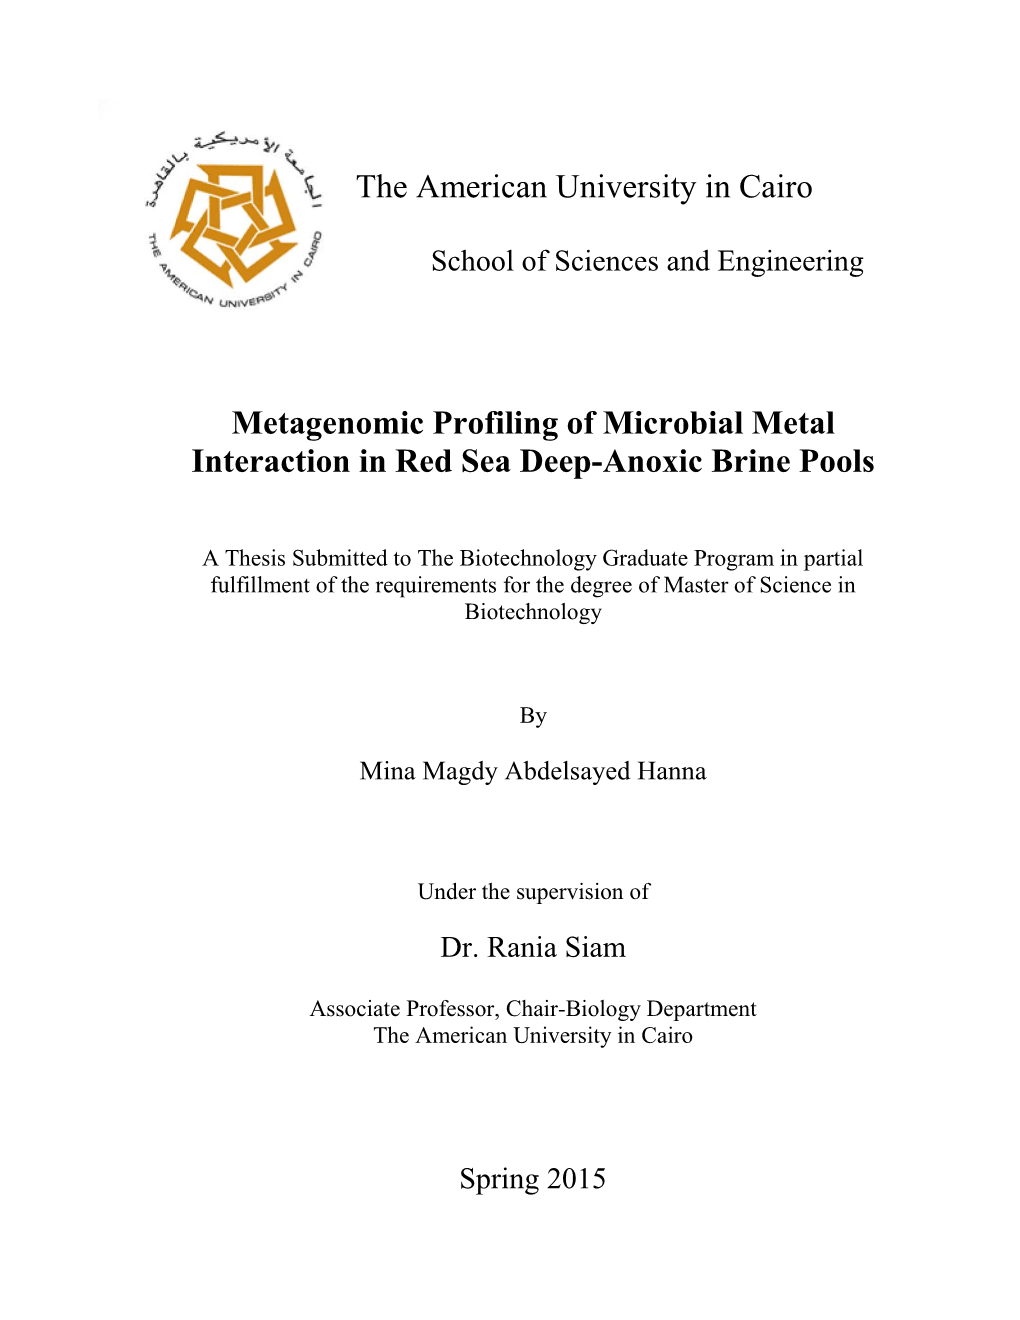 Metagenomic Profiling of Microbial Metal Interaction in Red Sea Deep-Anoxic Brine Pools